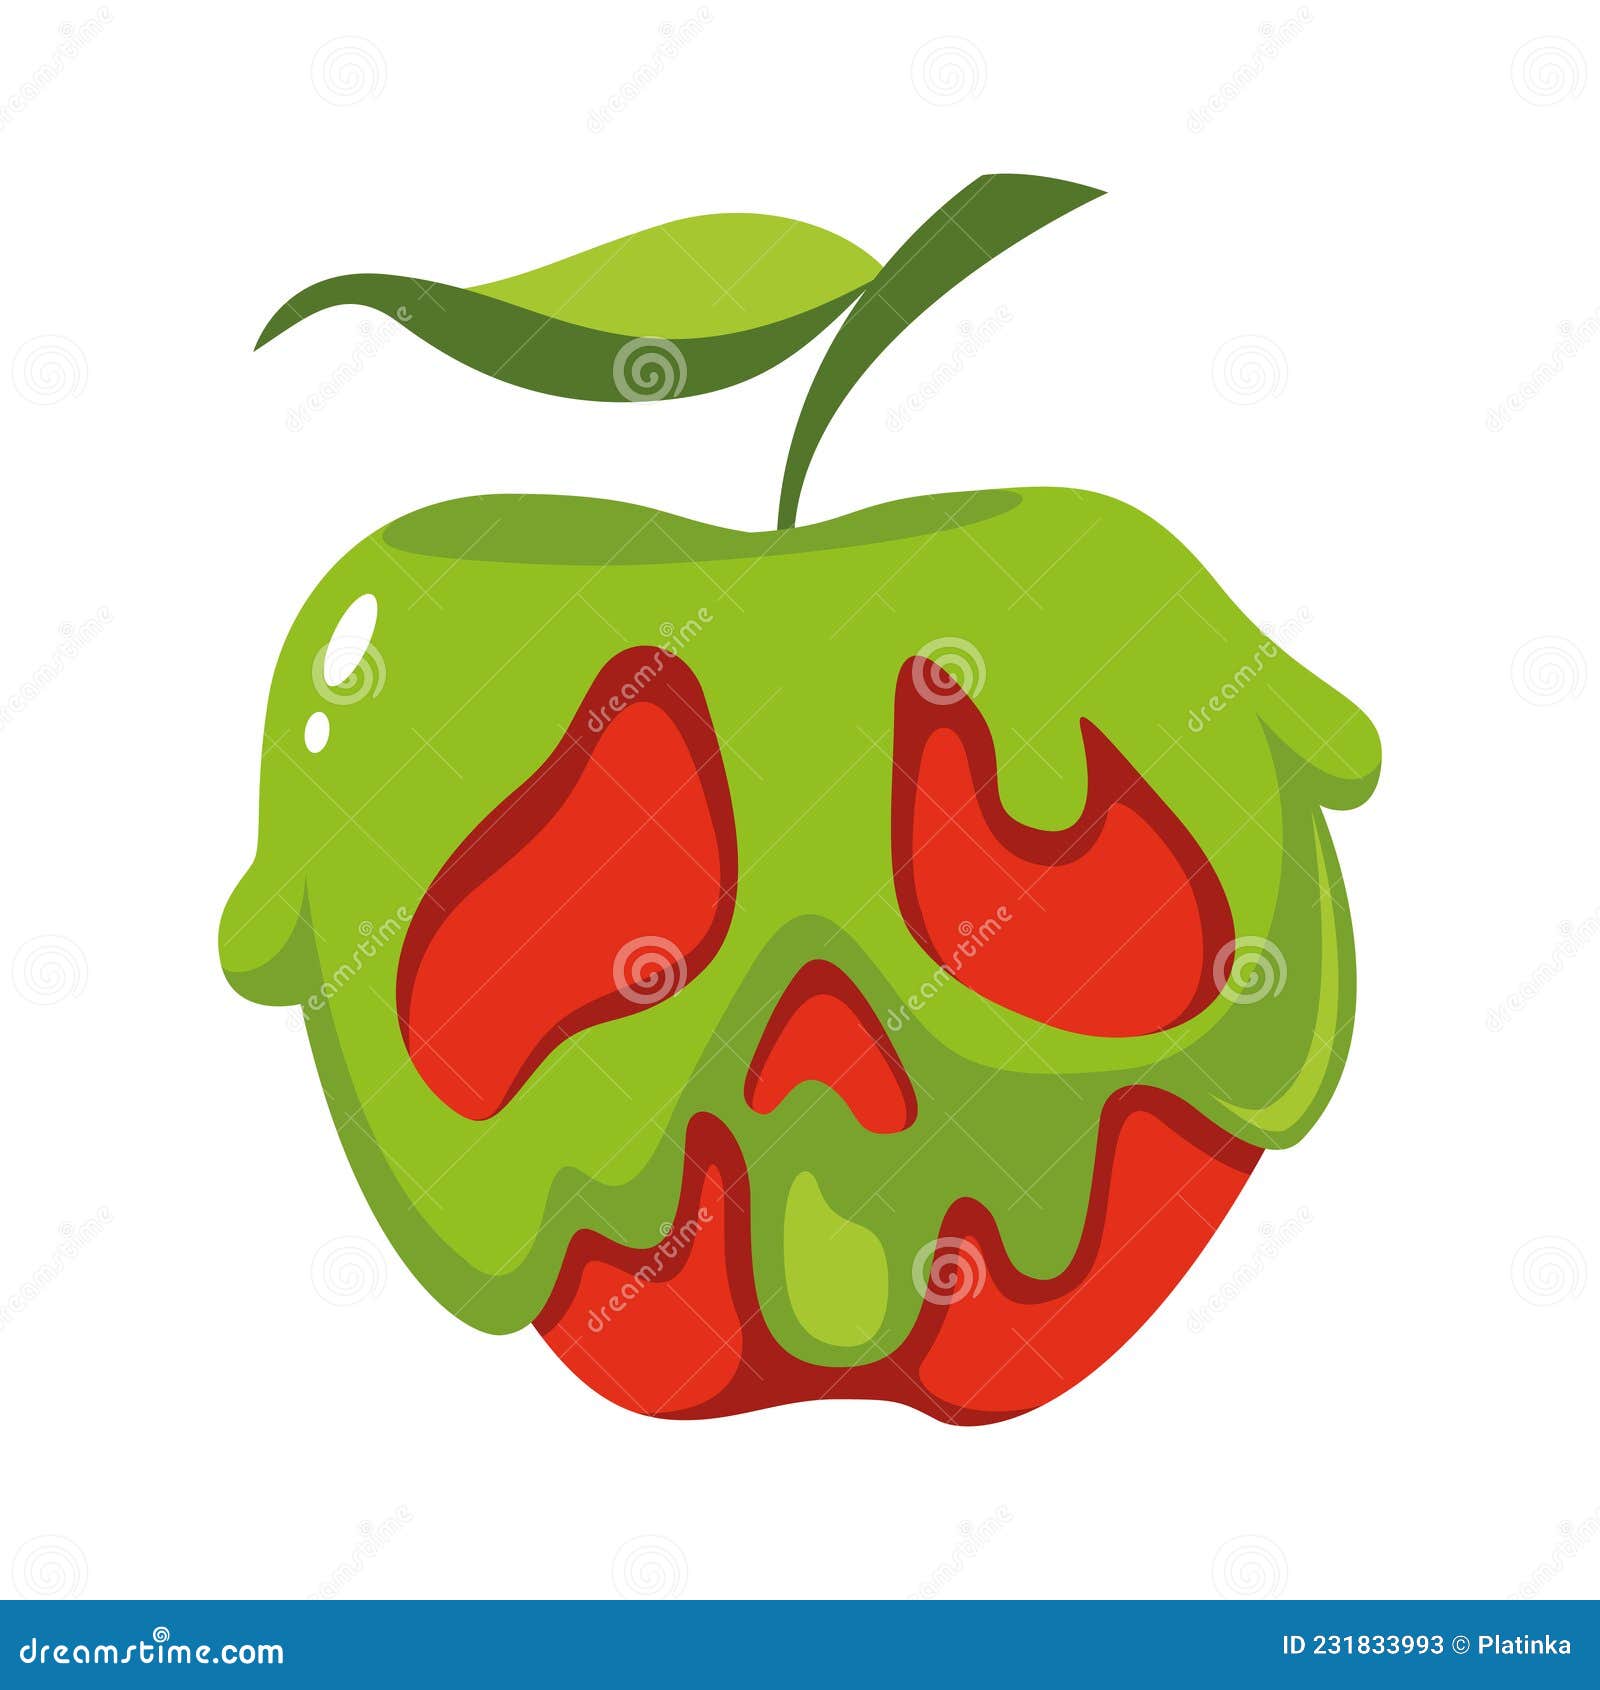 poison apple for halloween, cartoon  